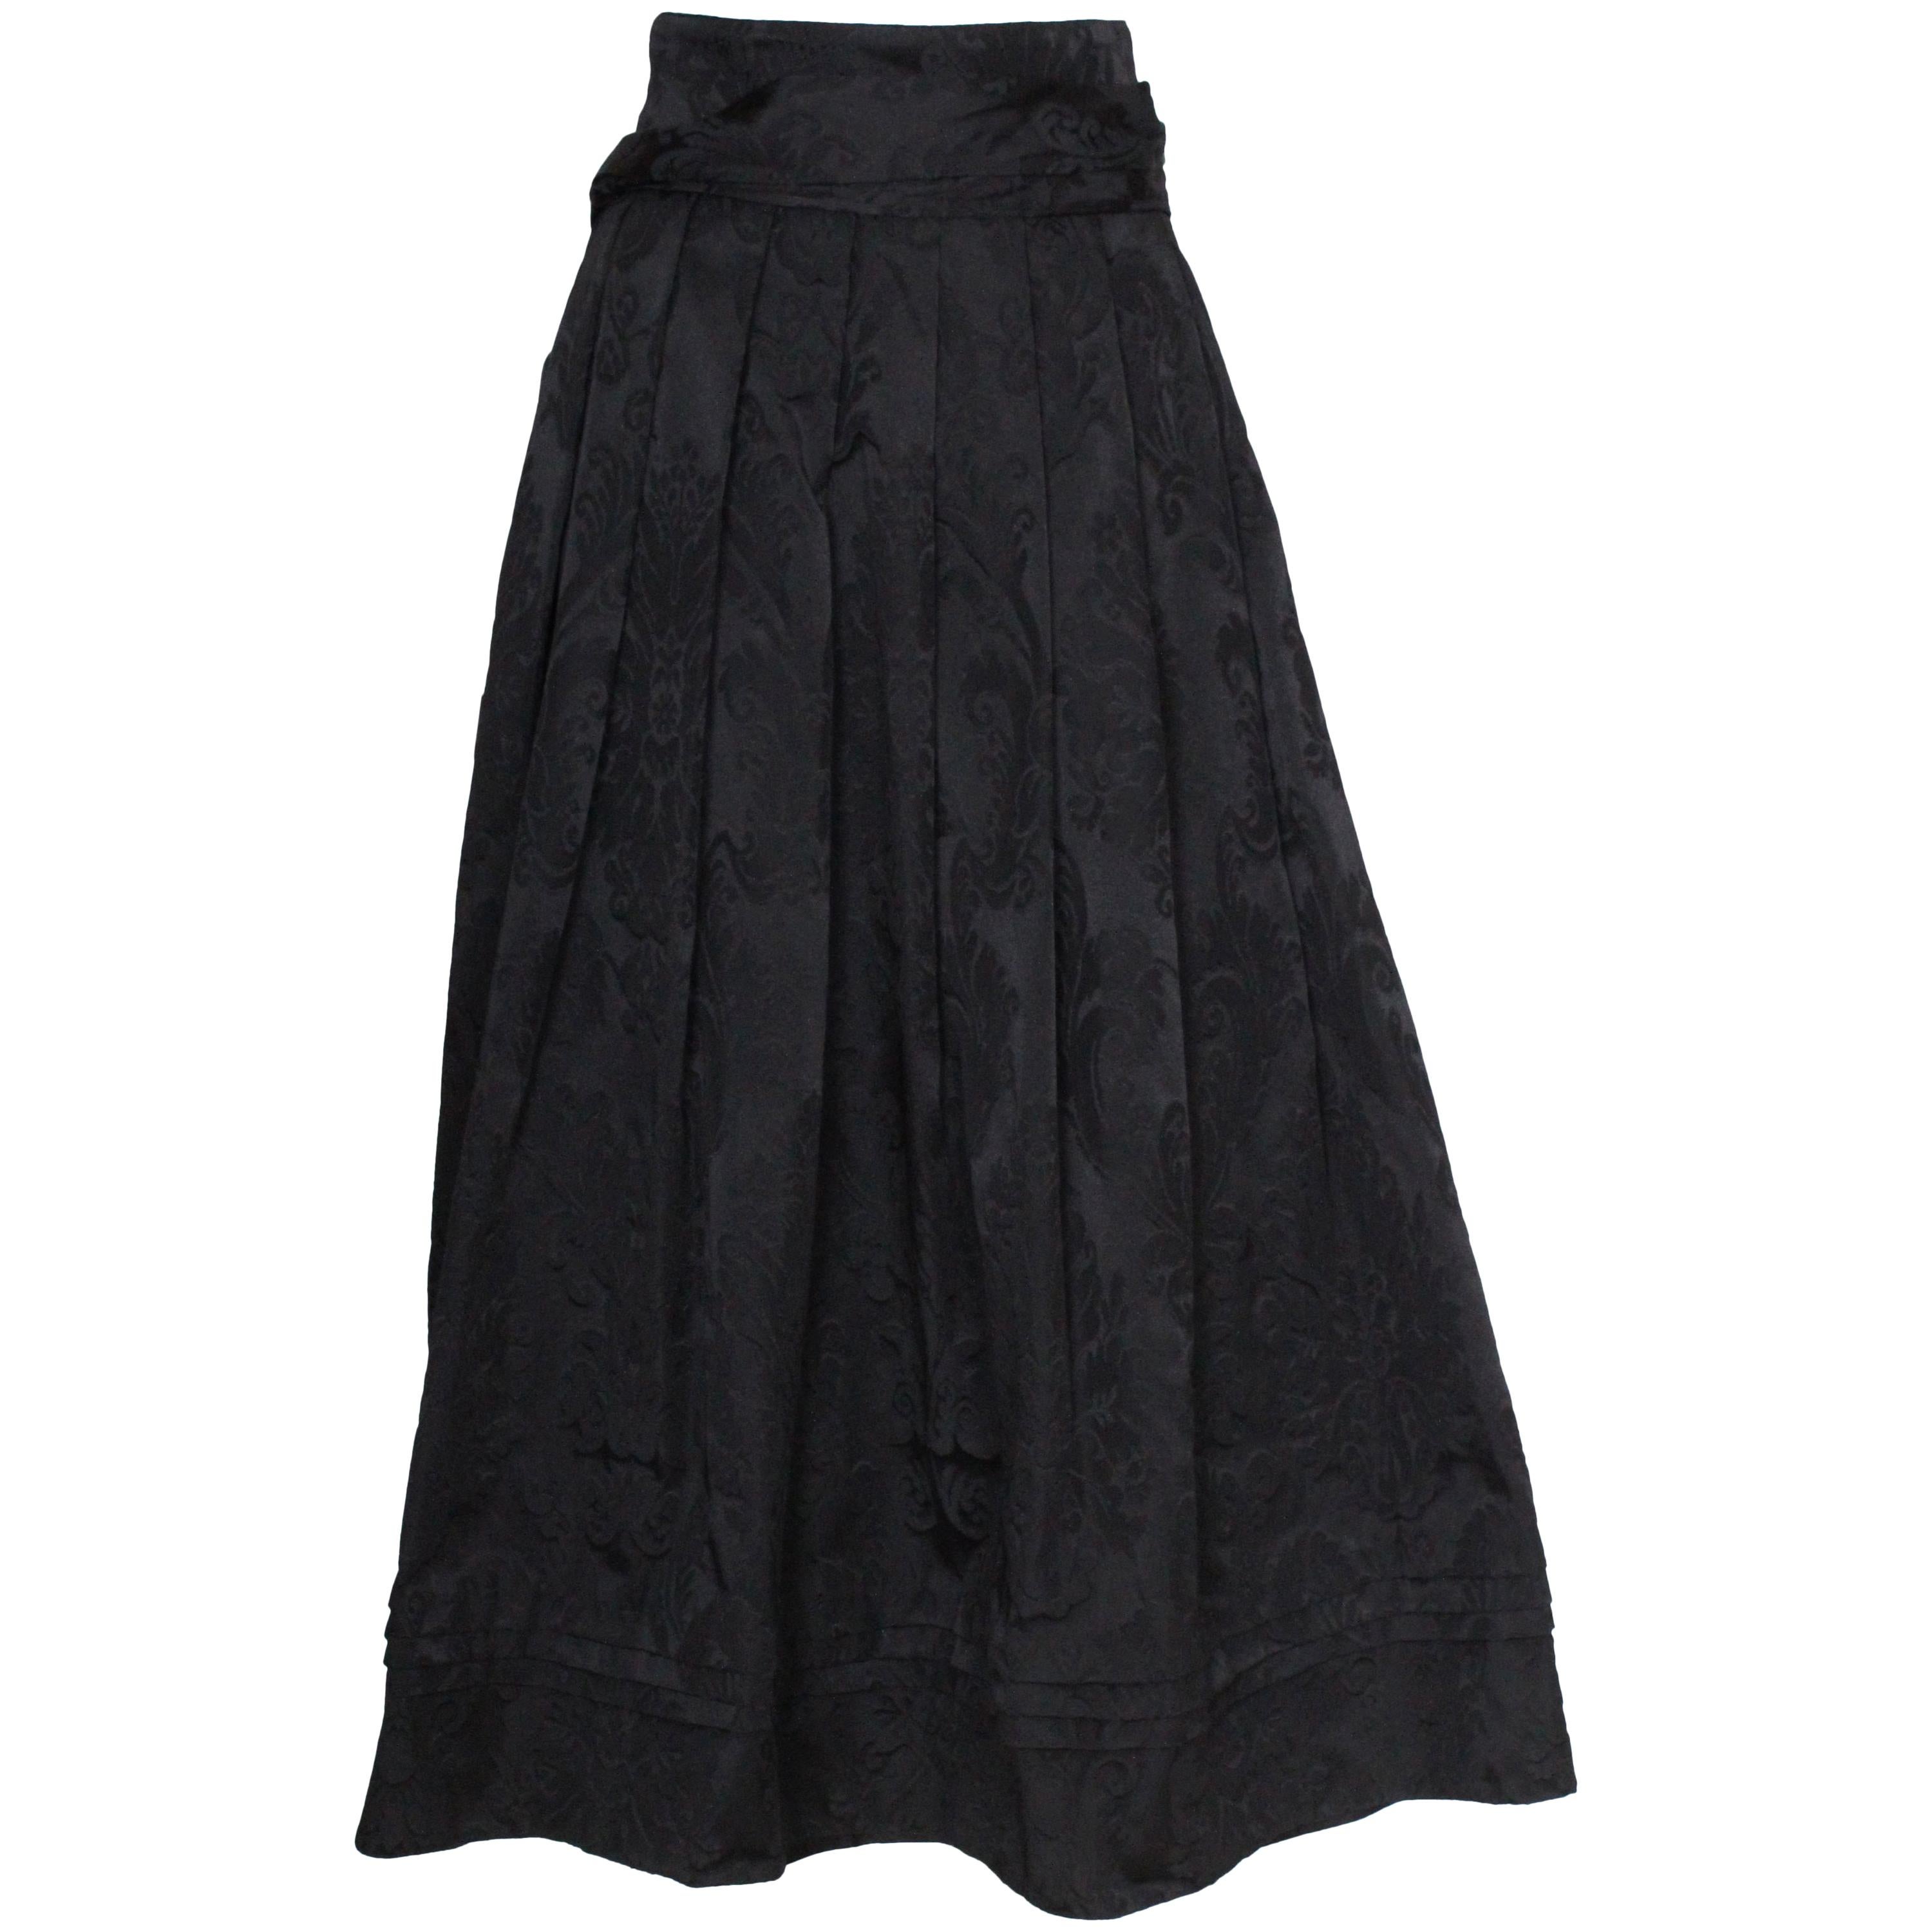  Vintage Black Evening Skirt by Louis Feraud